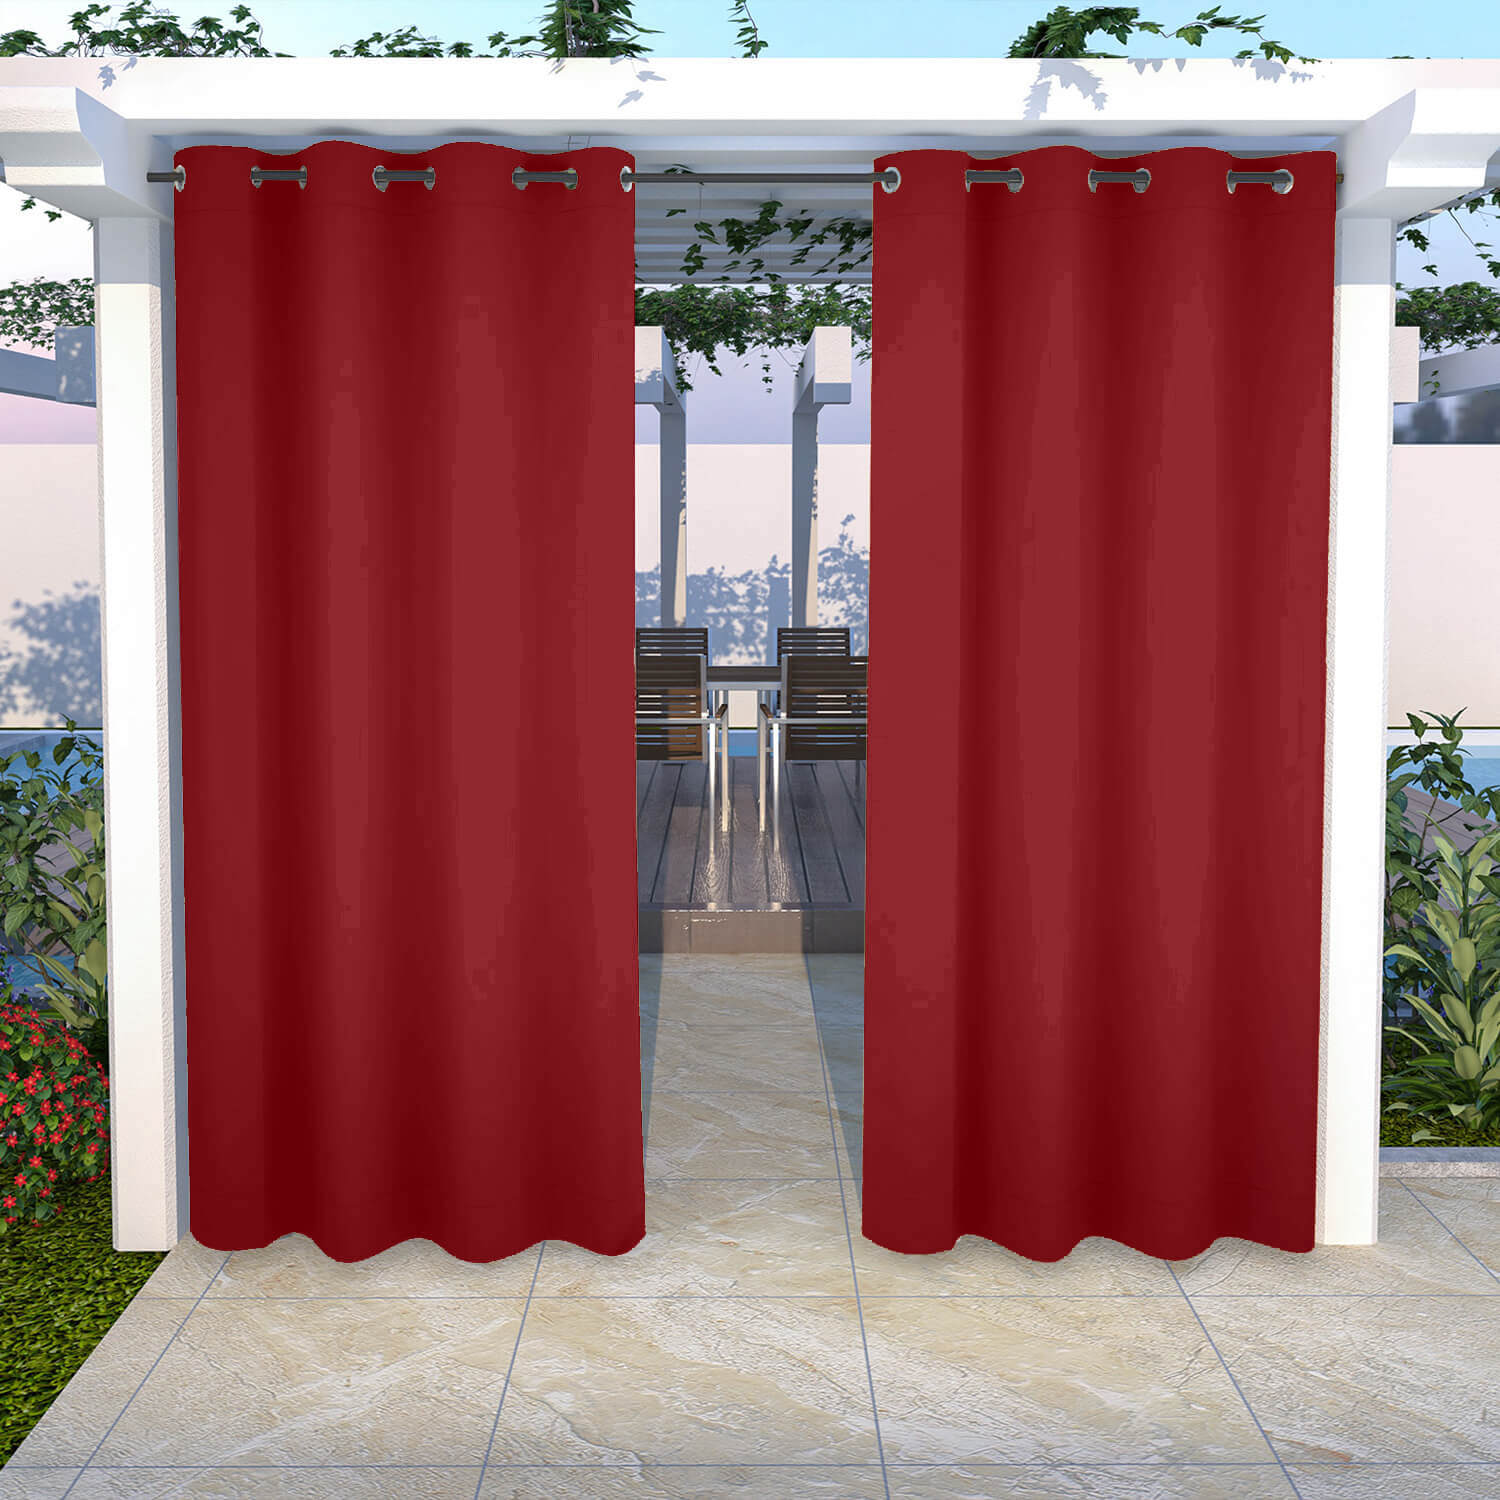 Snowcity Outdoor Curtains Waterproof Grommet Top 1 Panel - Red